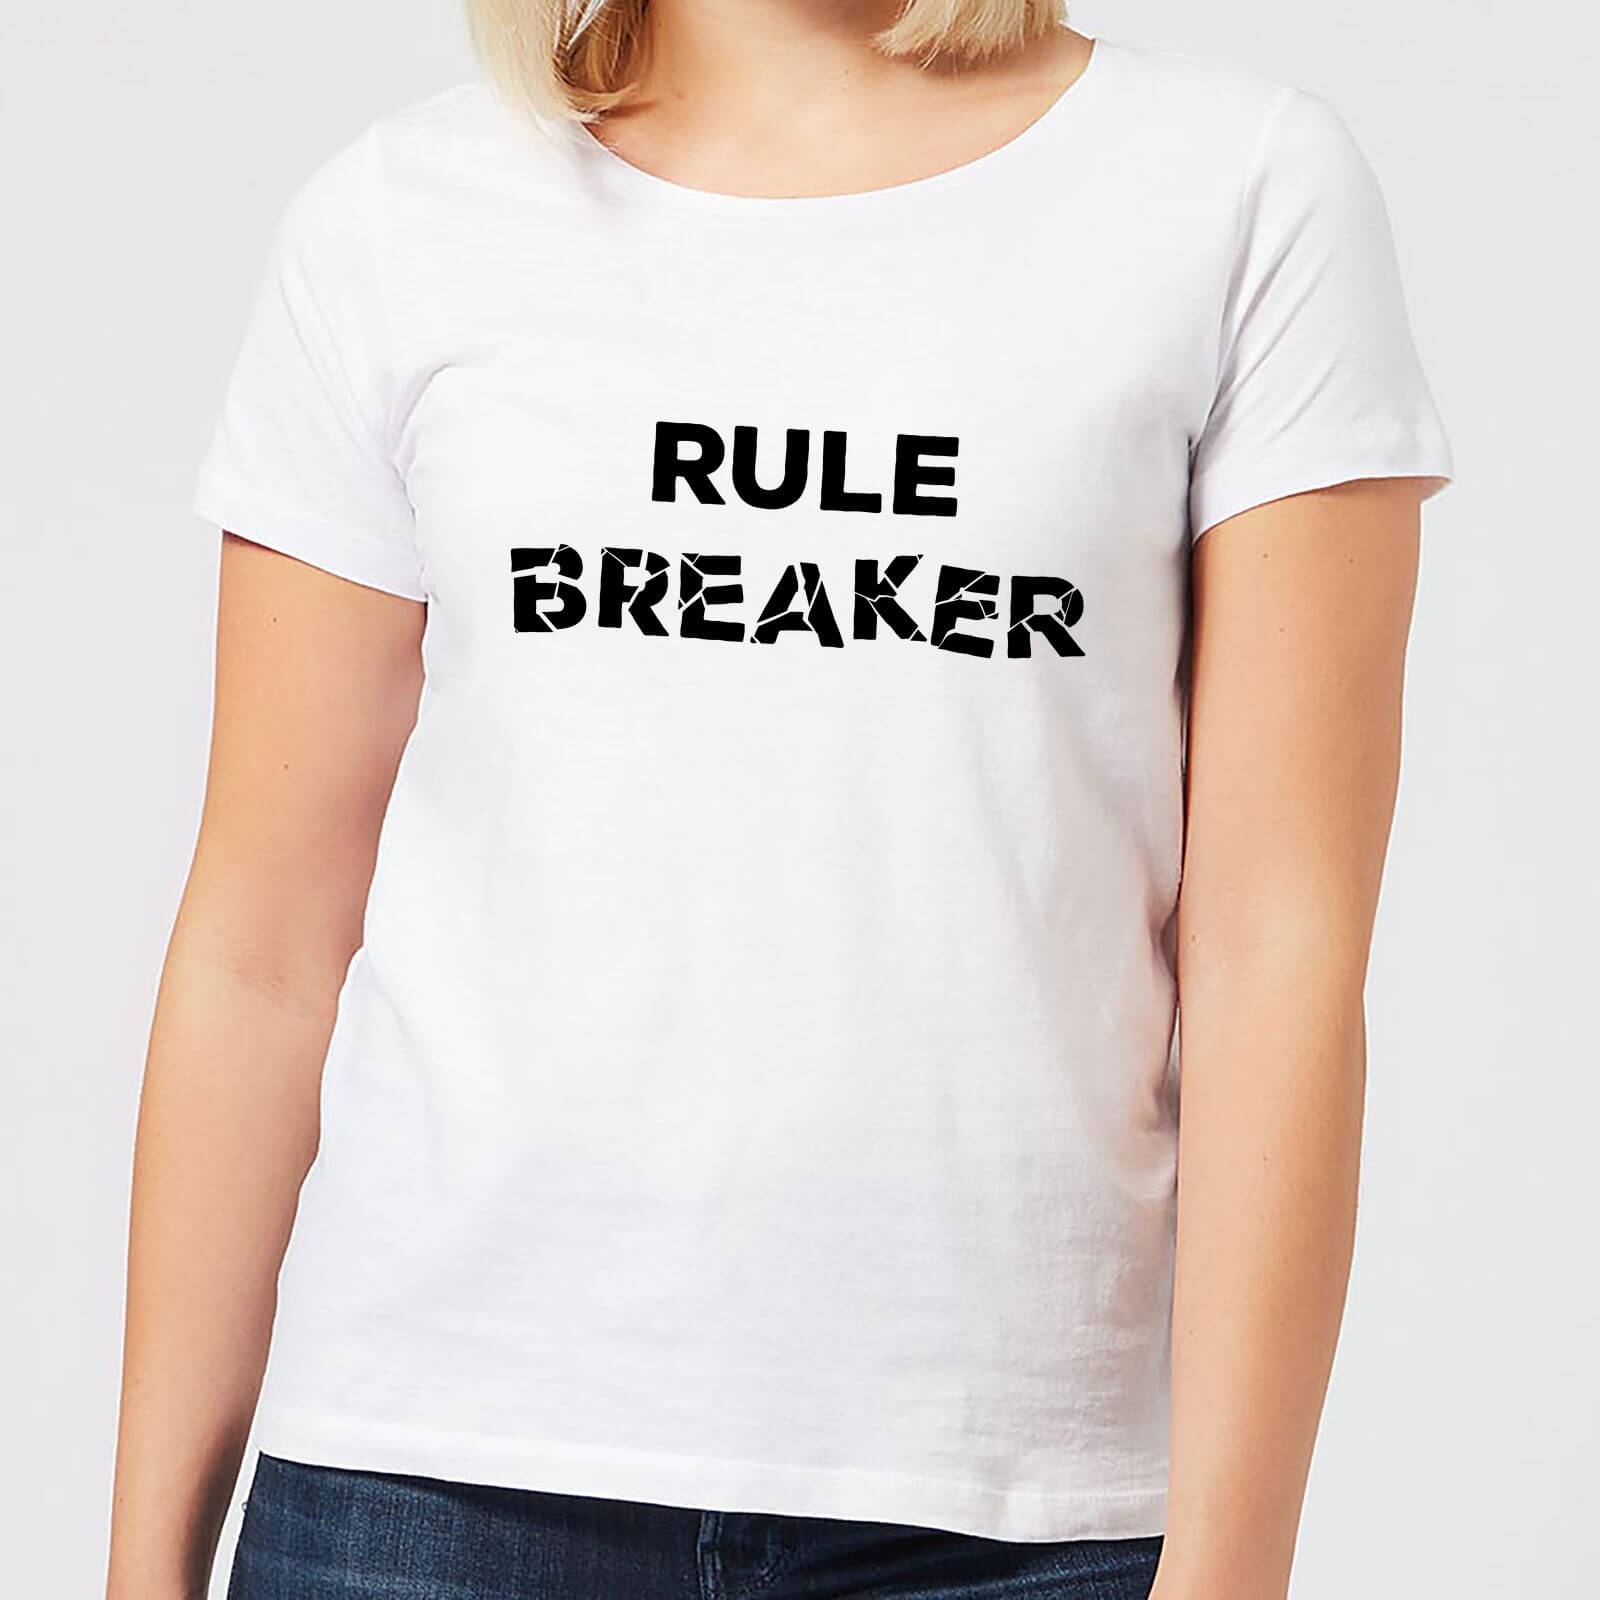 Rule Breaker Women's T-Shirt - White - XL - White